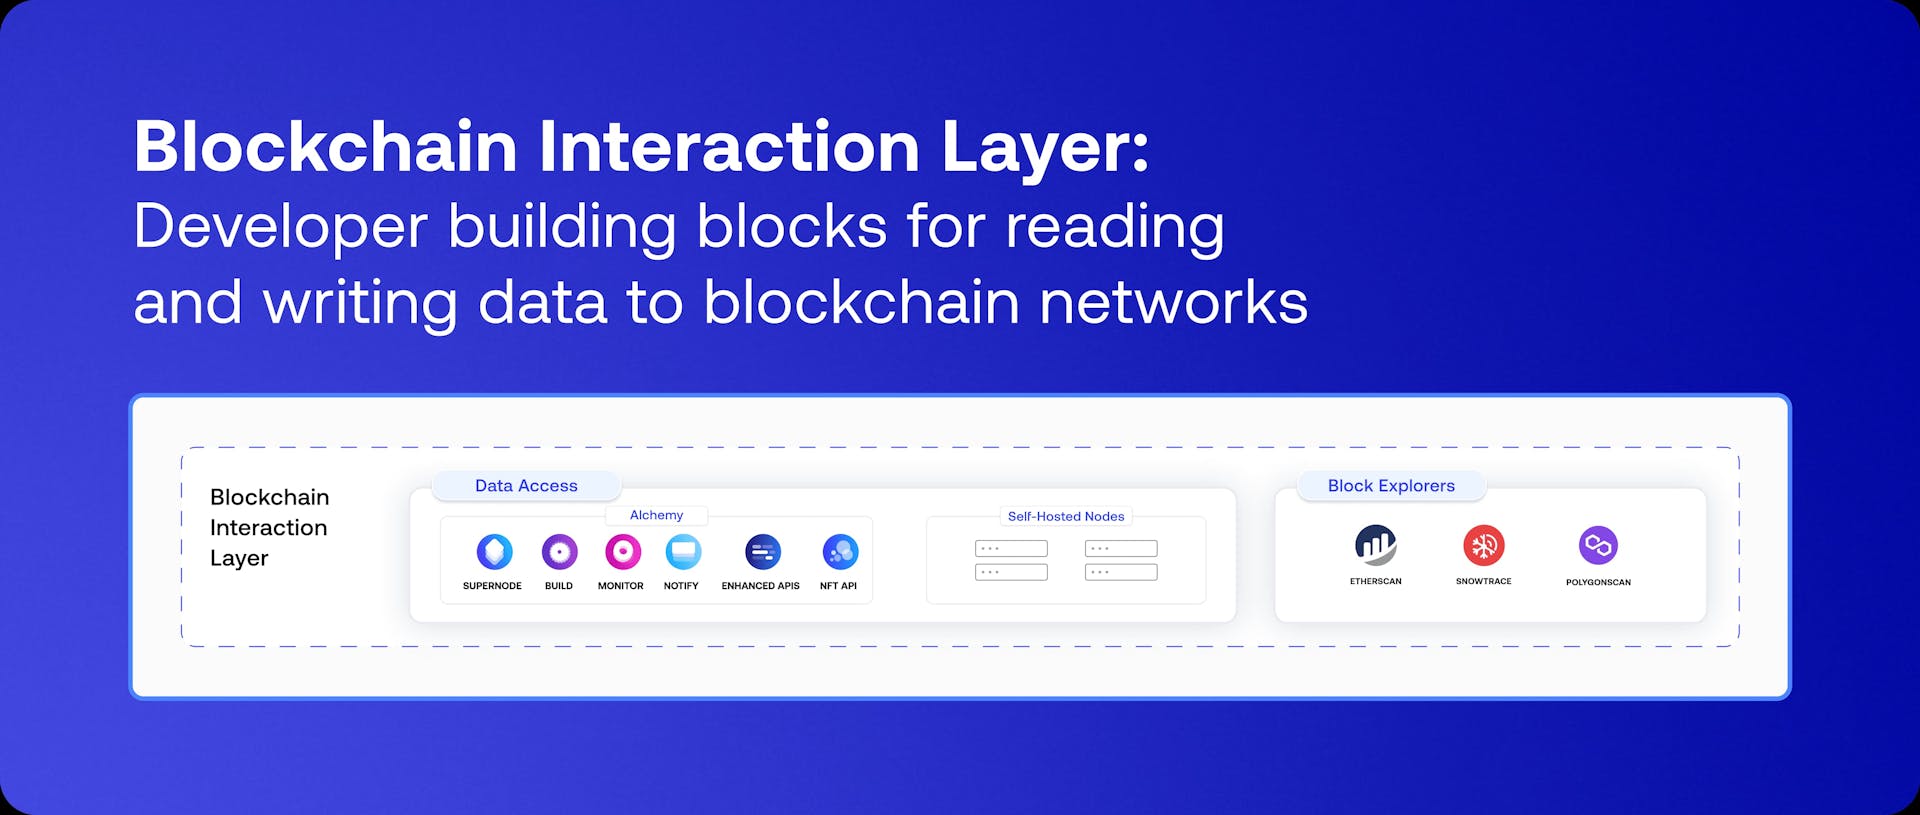 Blockchain Interaction Layer: Developer building blocks for reading/writing data to blockchain networks